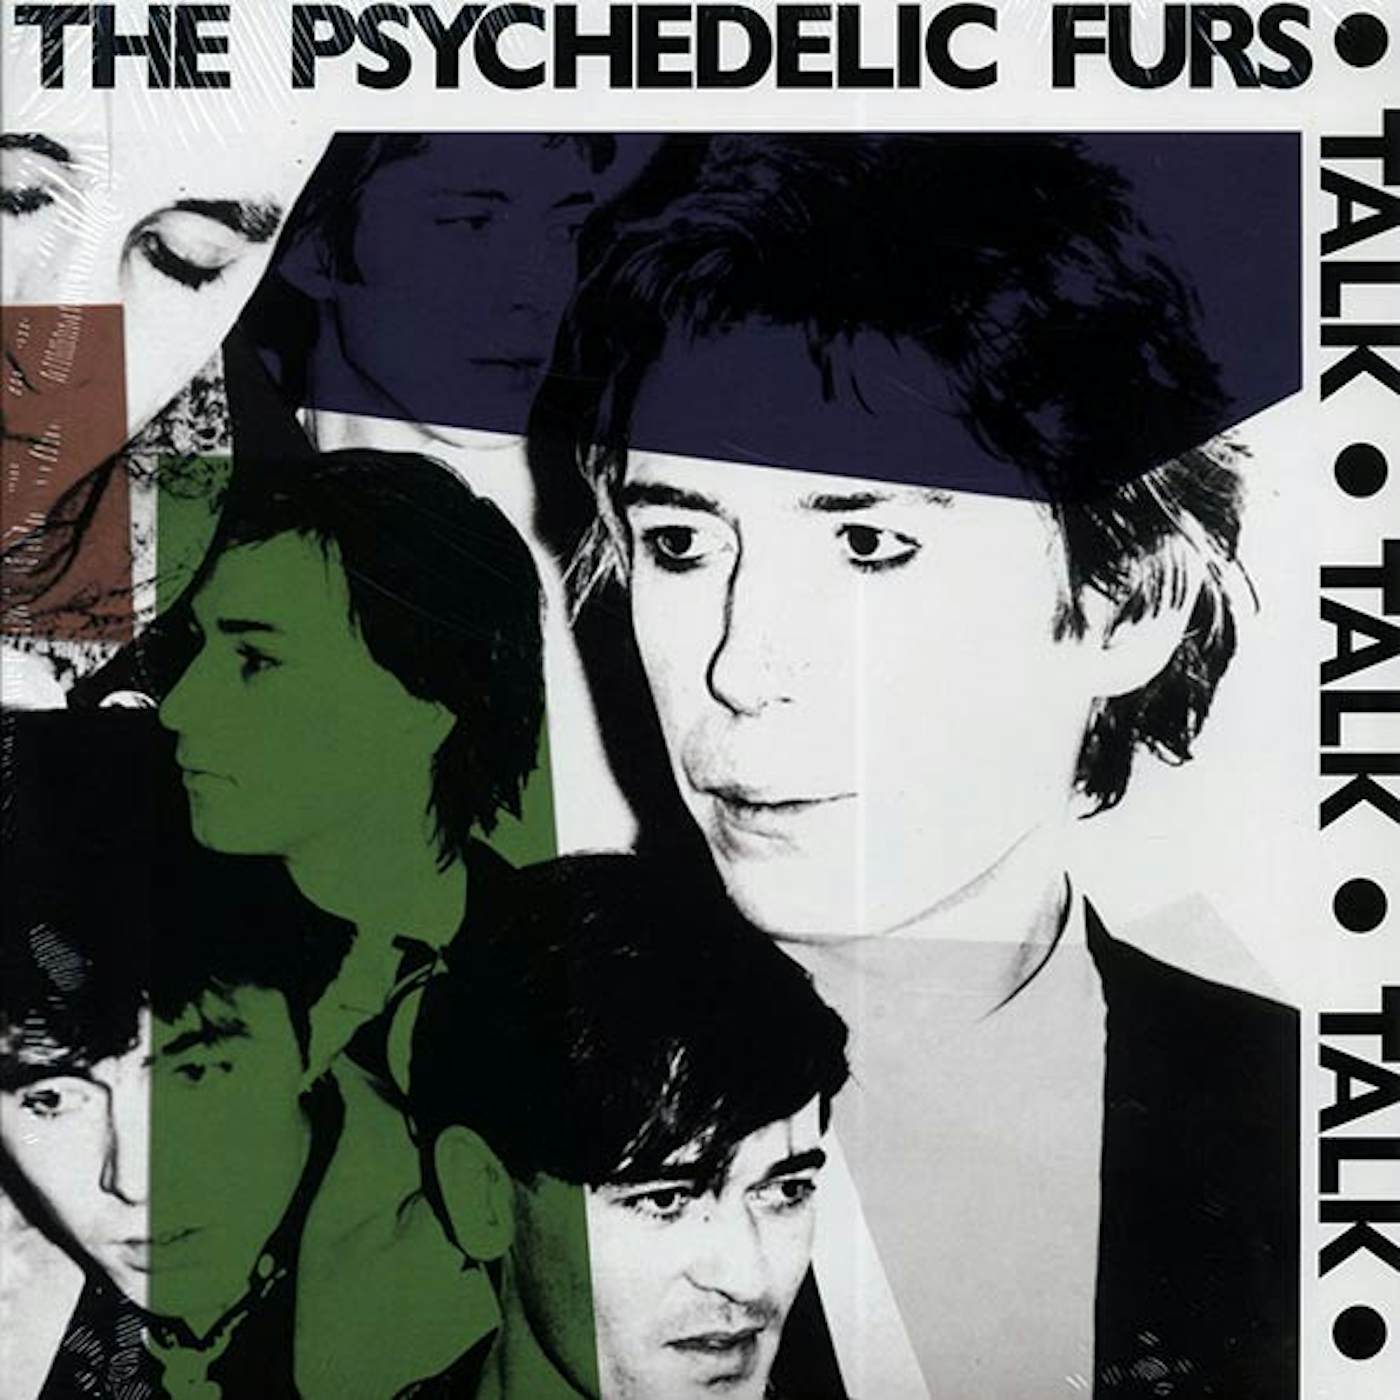  The Psychedelic Furs  LP -  Talk Talk Talk (180g) (Vinyl)